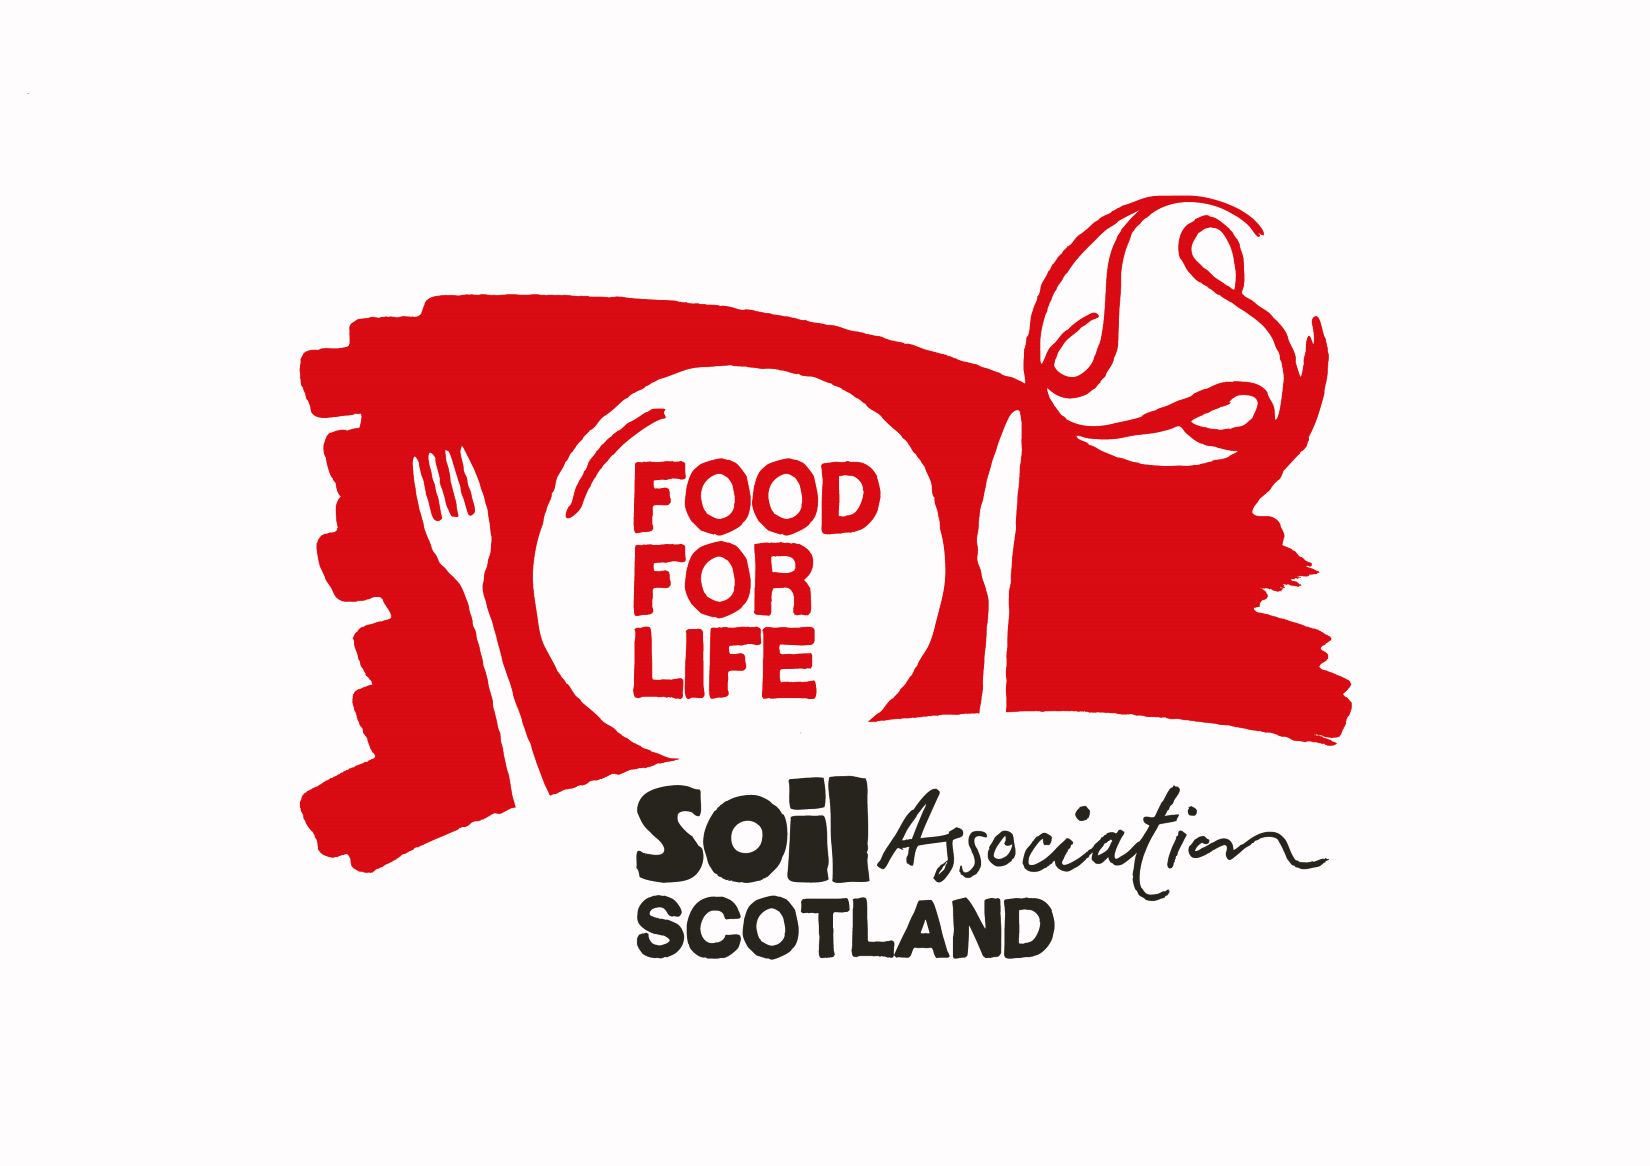 Food for life scotland logo soil association sml